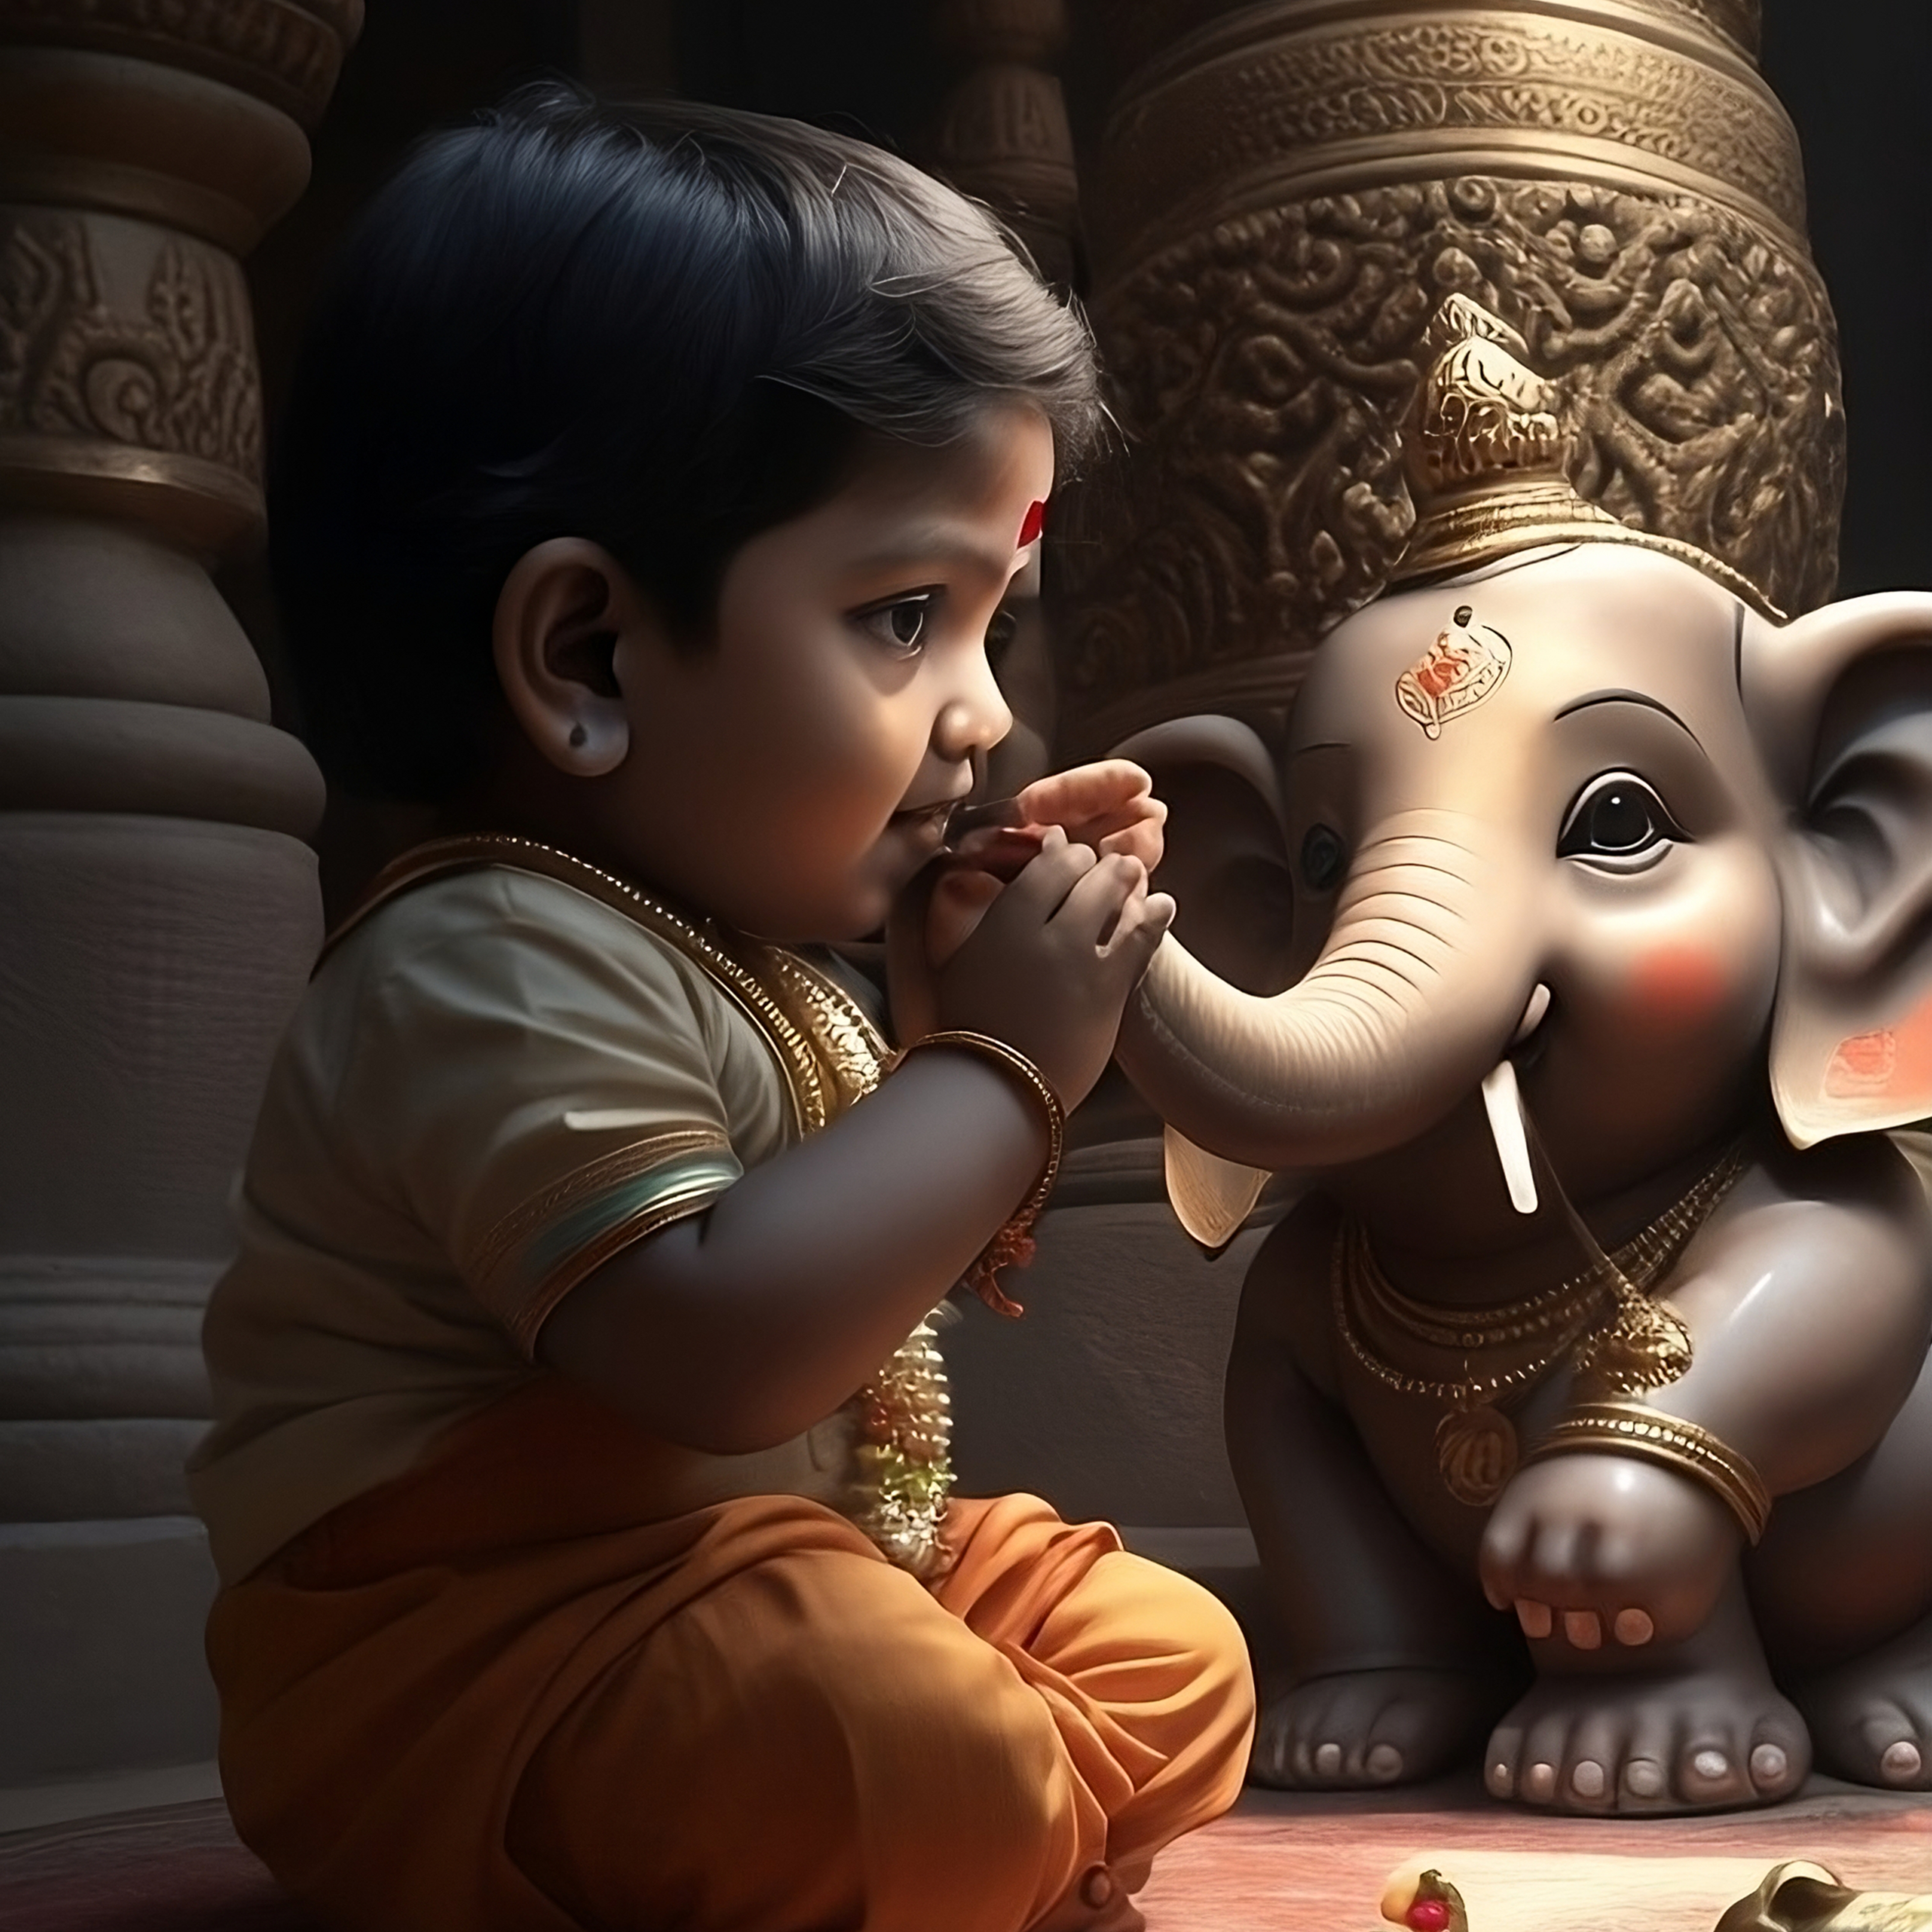 Cute Ganesh ji as Baby hd image download for free